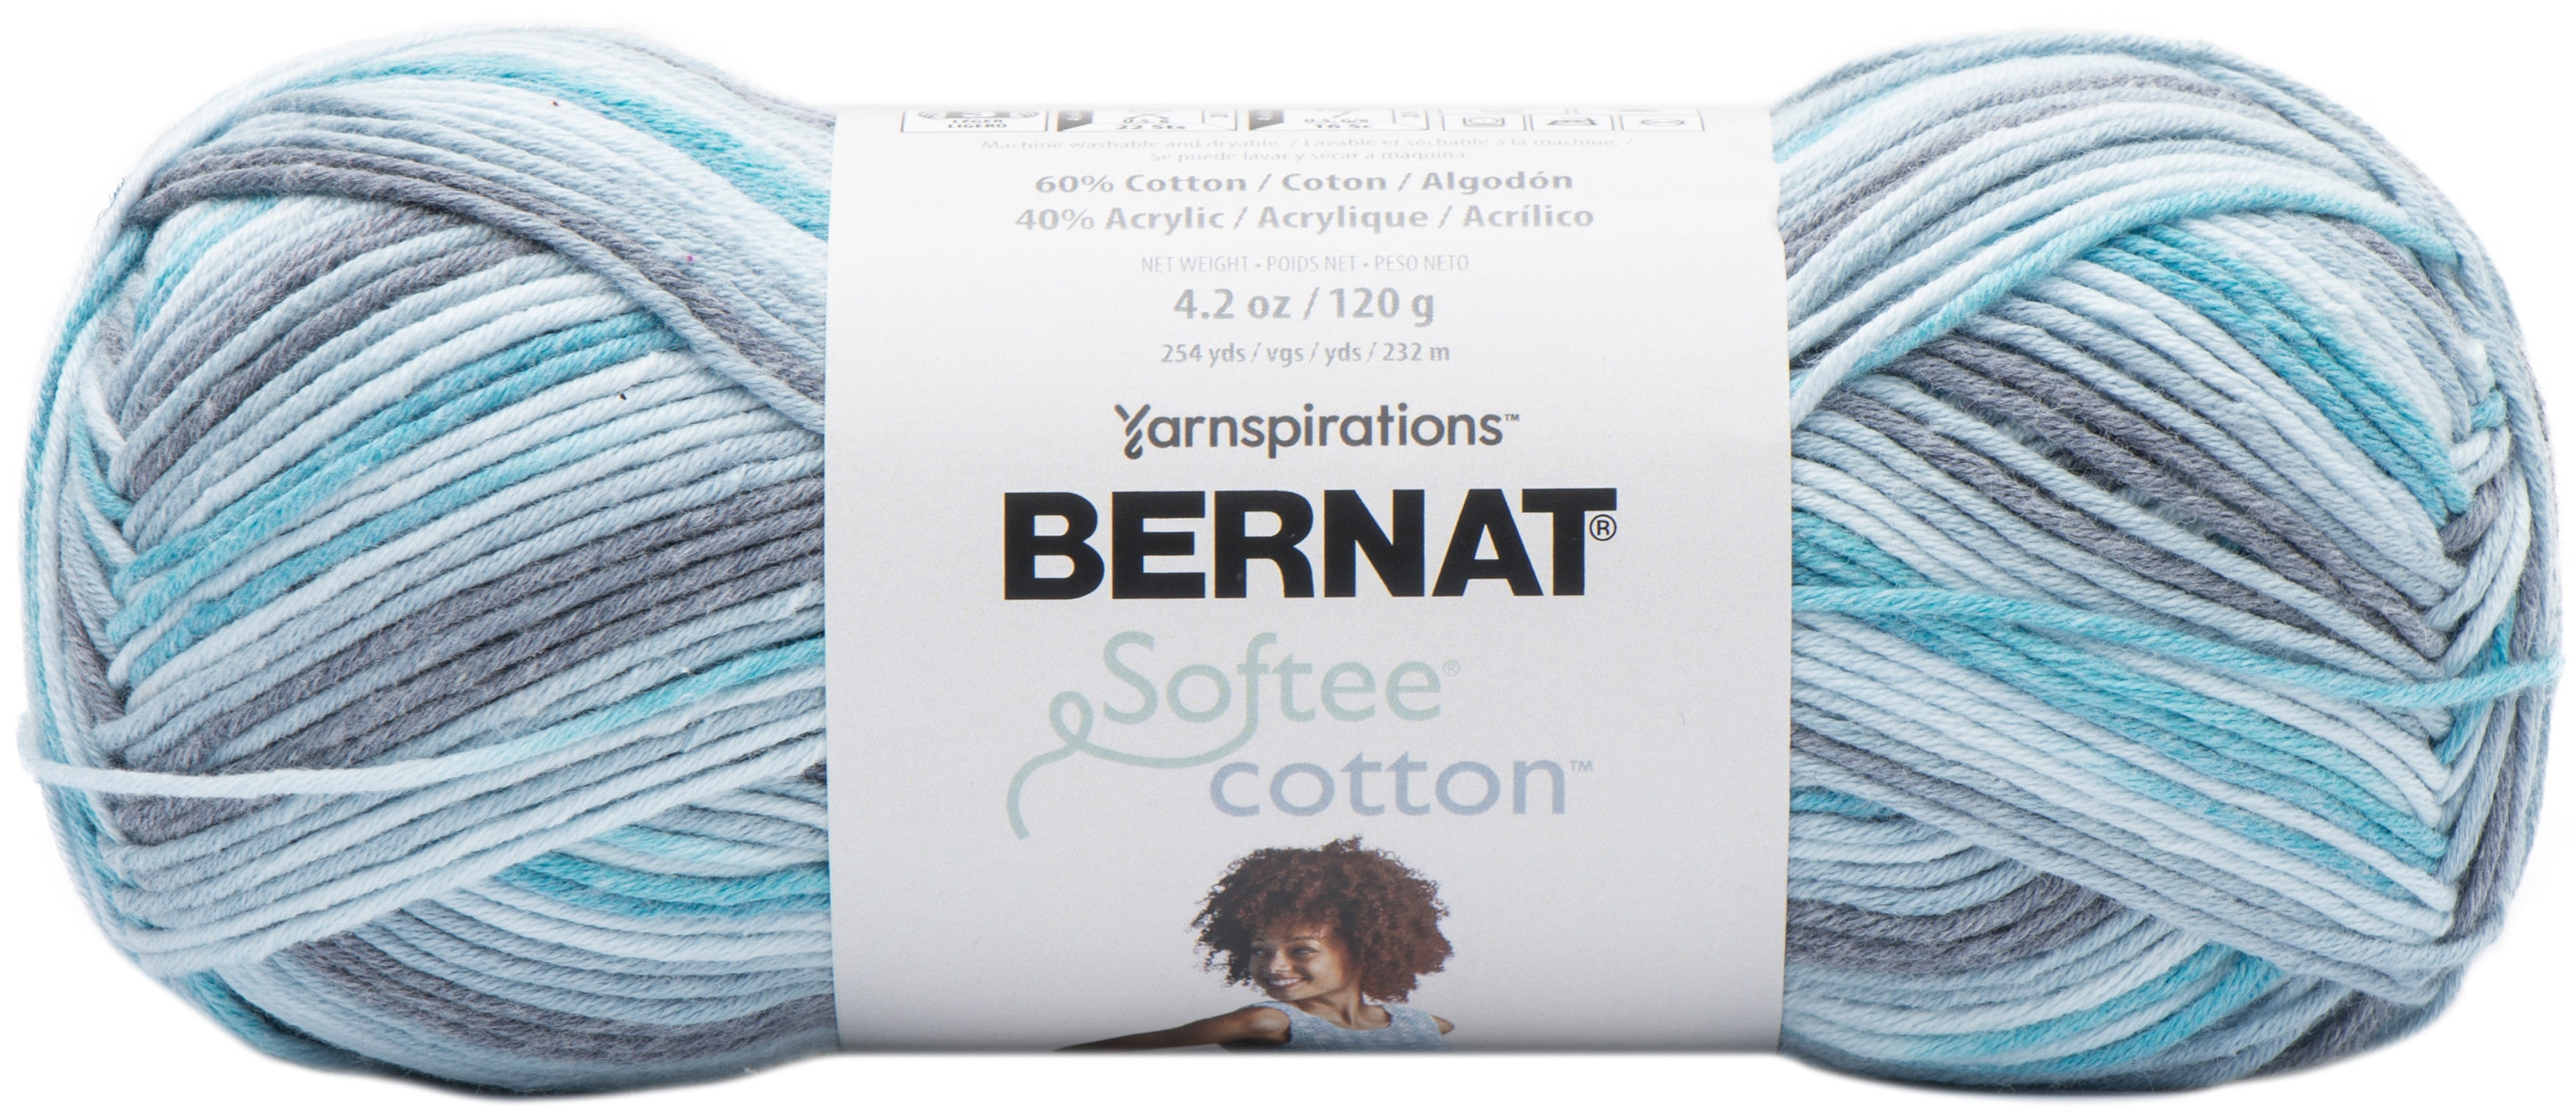  Bernat Softee Cotton Yarn, Feather Gray